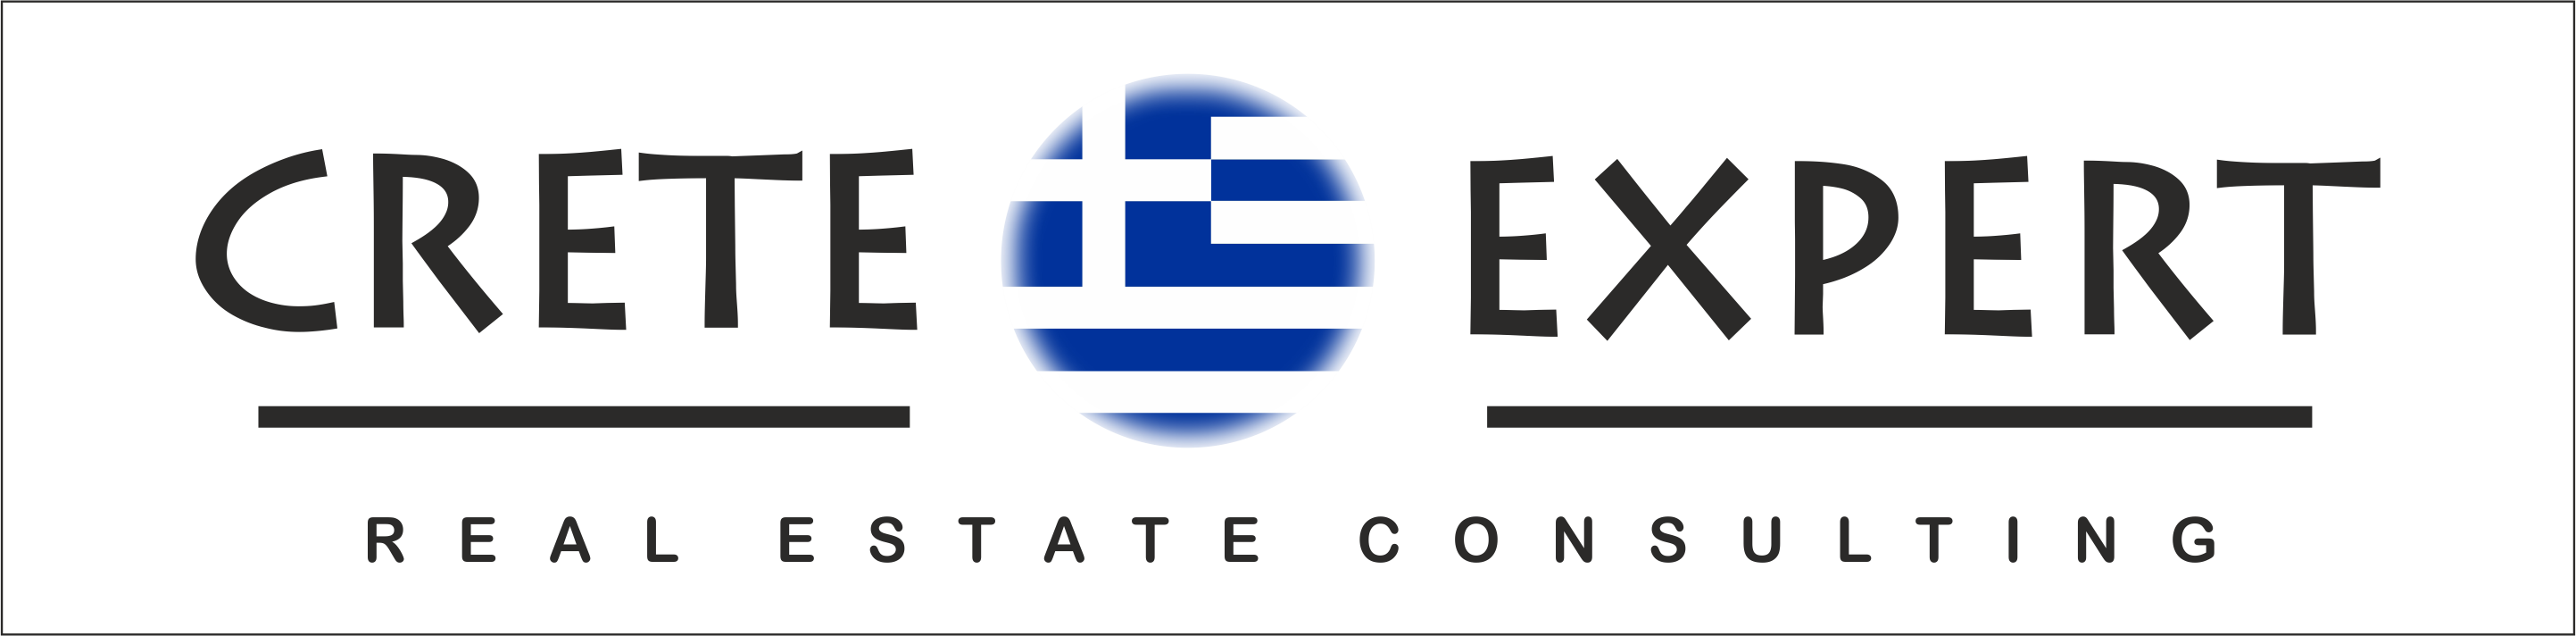 Crete Expert